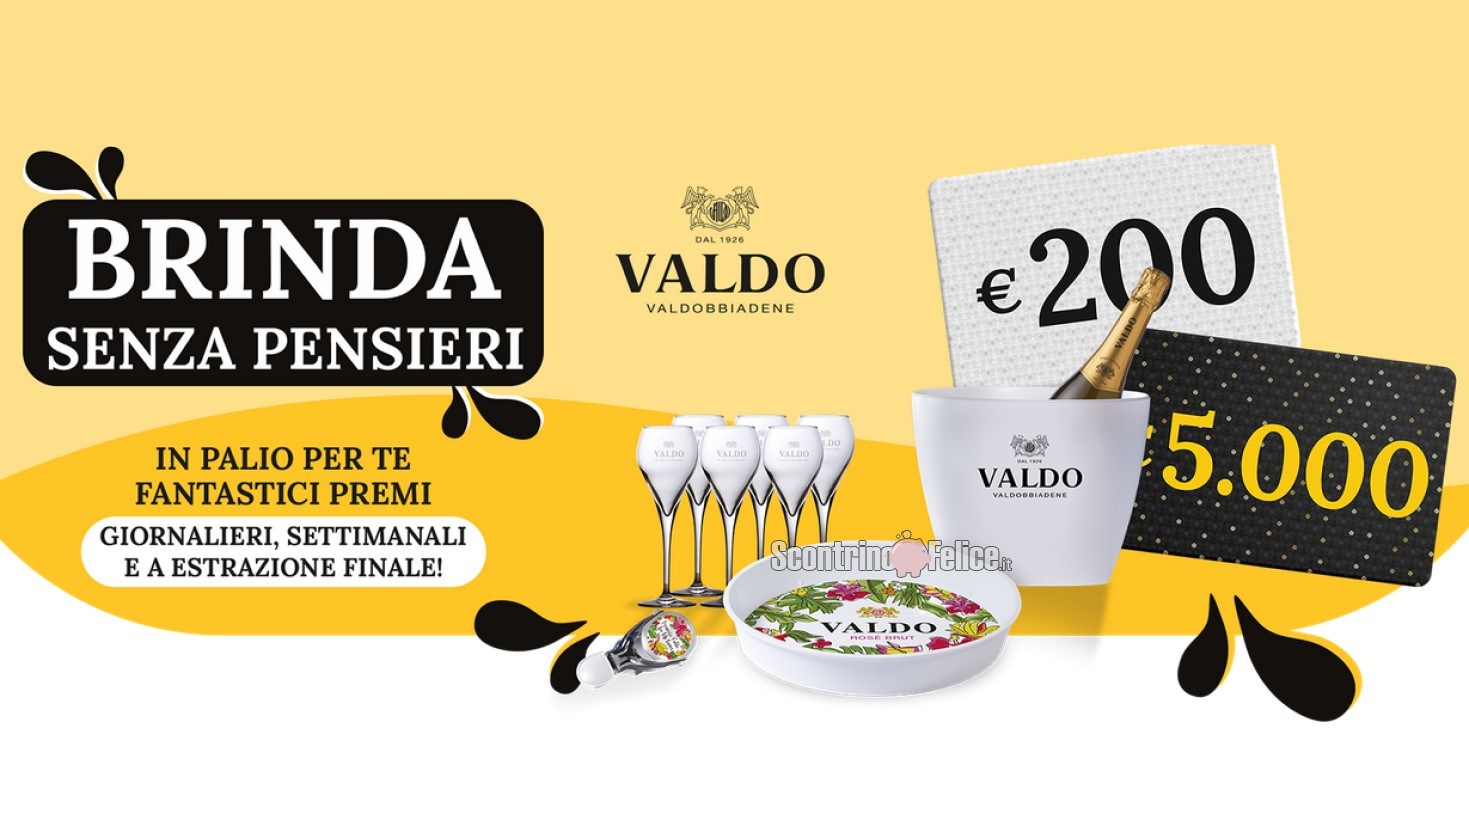 Concorso Valdo "Brinda senza pensieri": vinci party kit, buoni spesa da 200 euro e 5.000 euro!